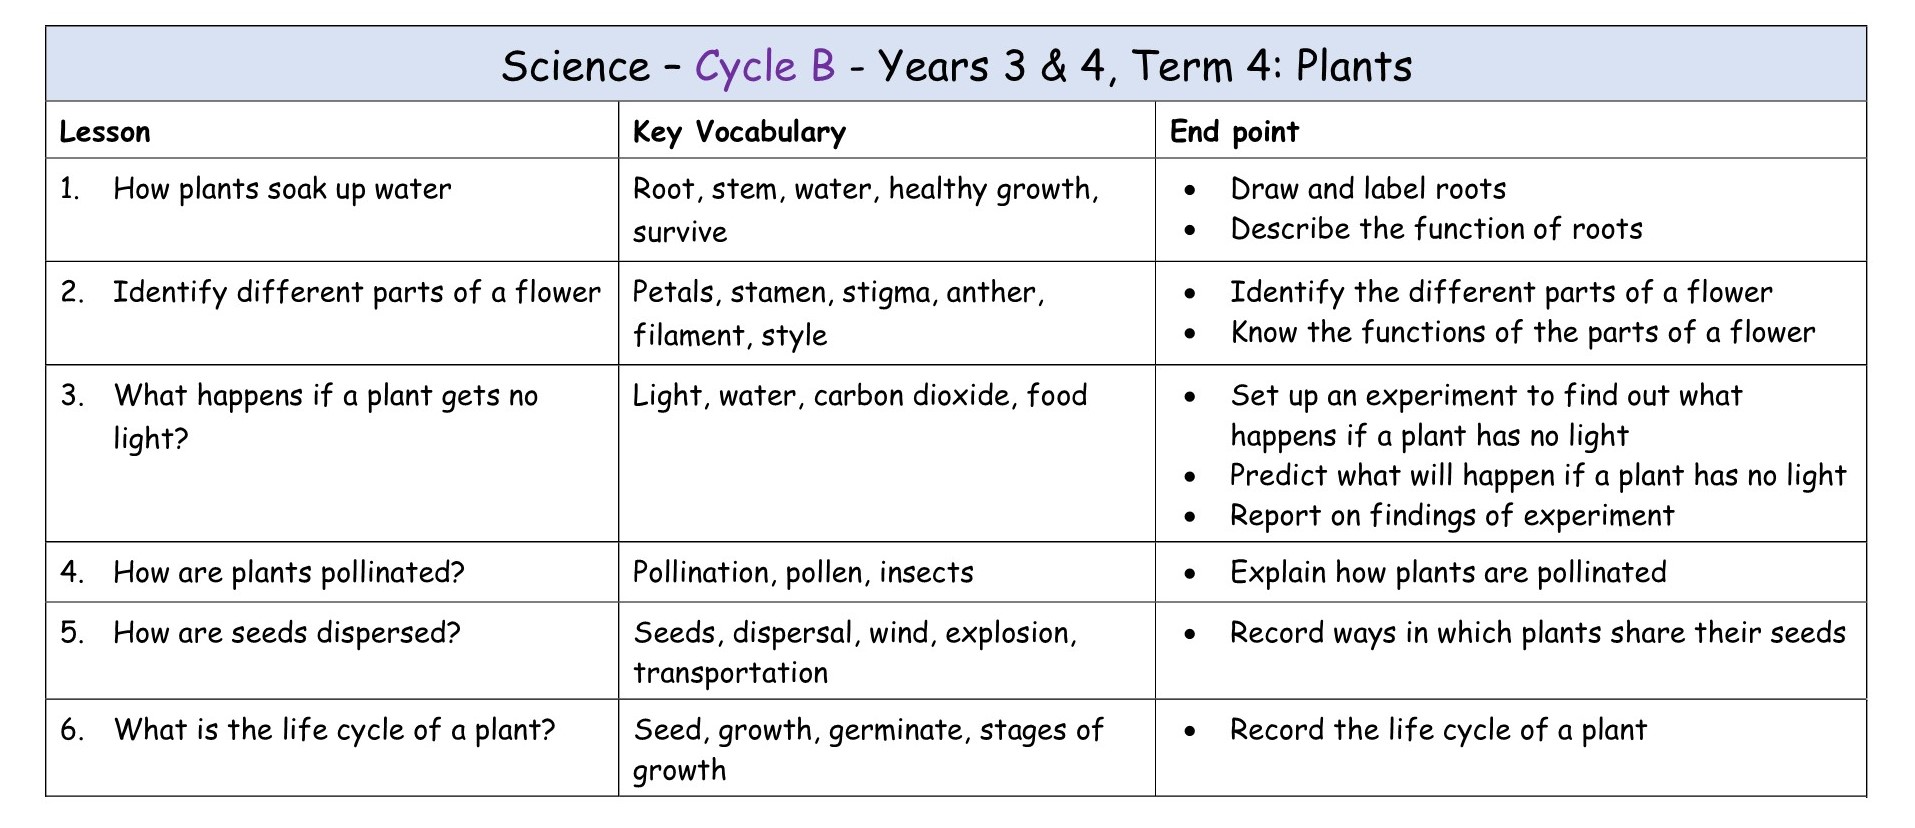 Science Y3-4 Cycle B T4